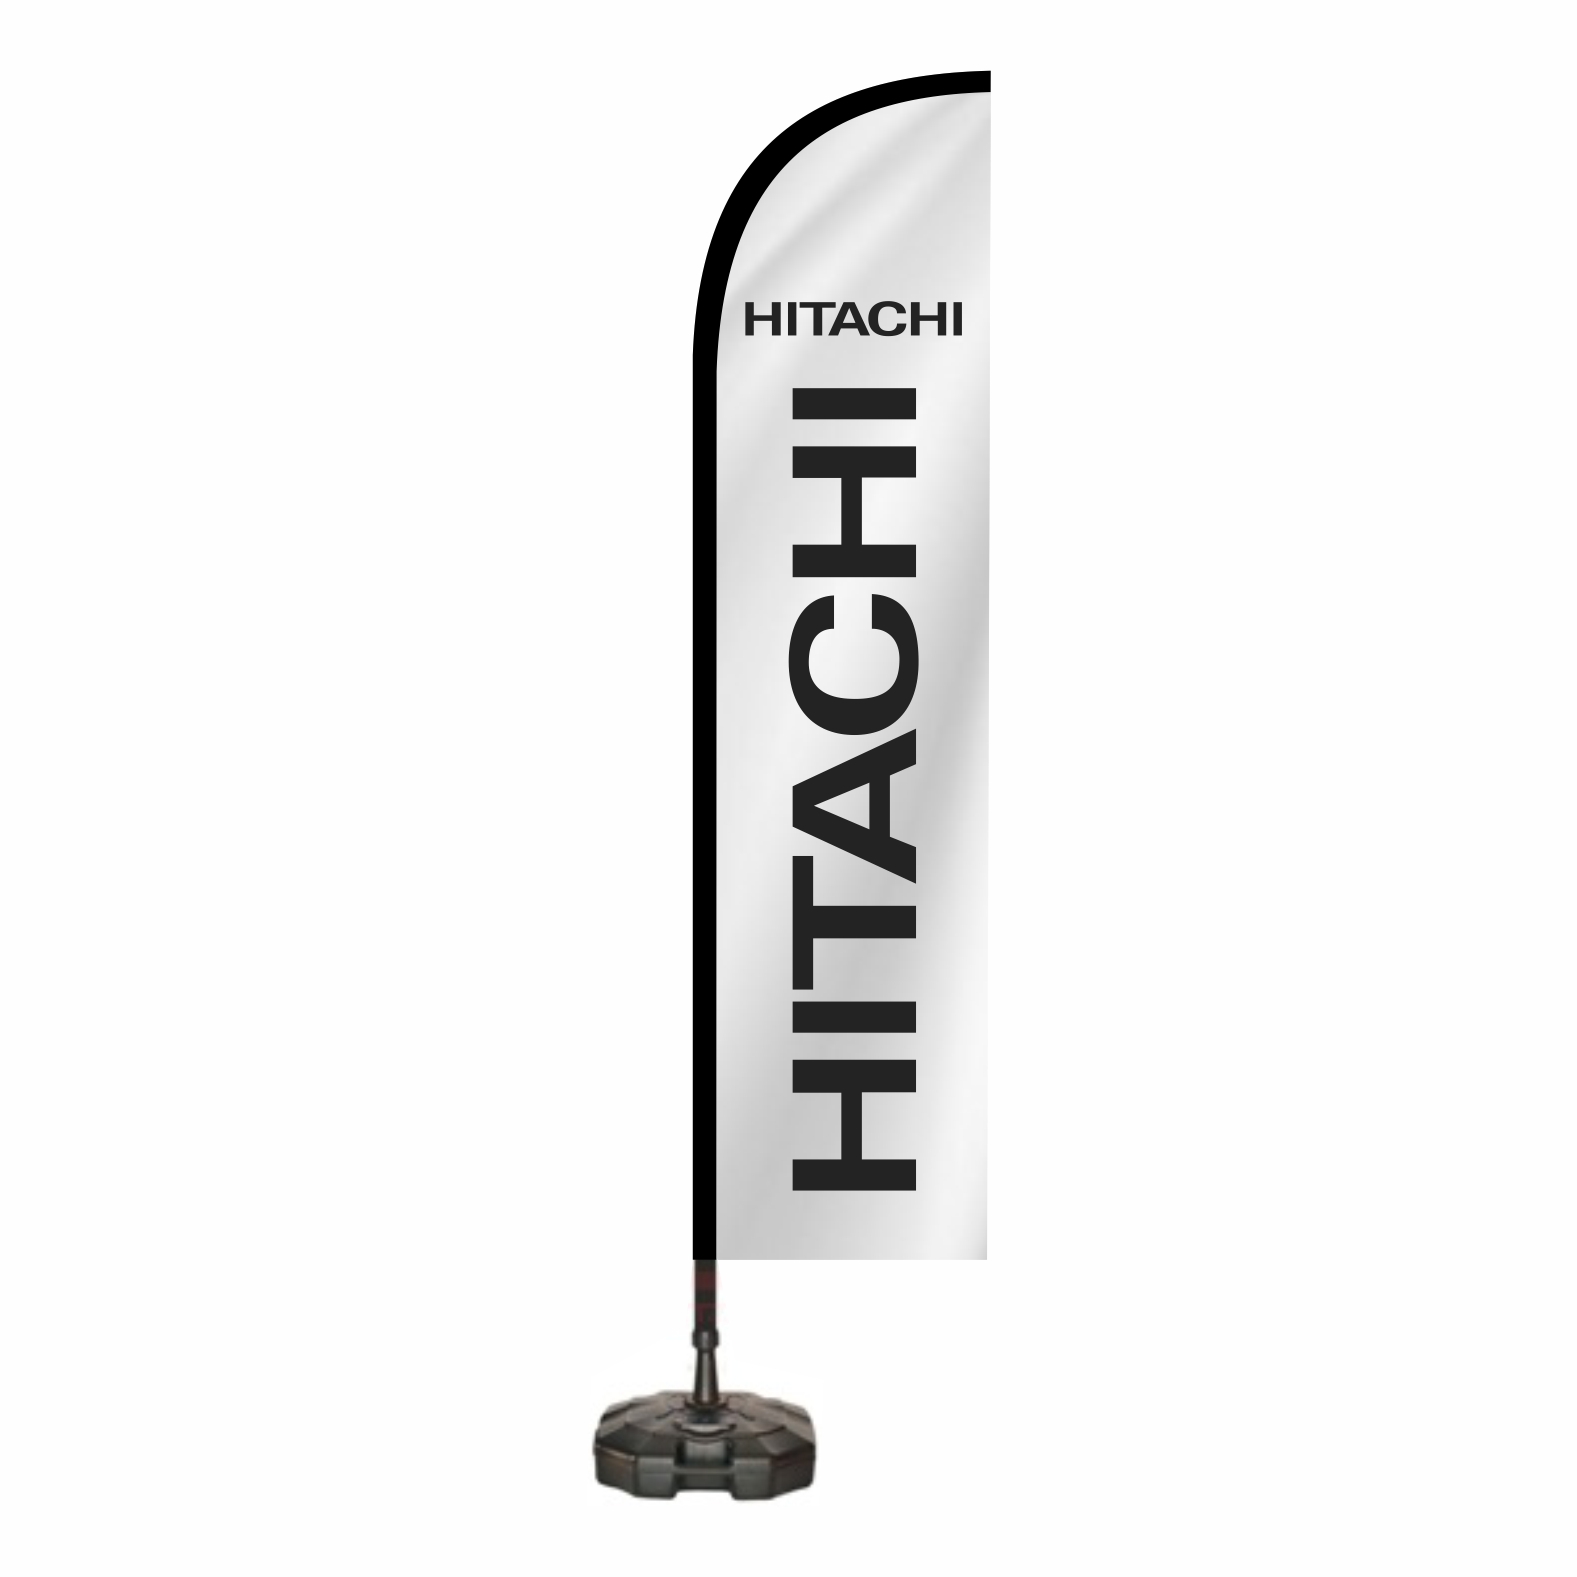 Hitachi Reklam Bayra Sat